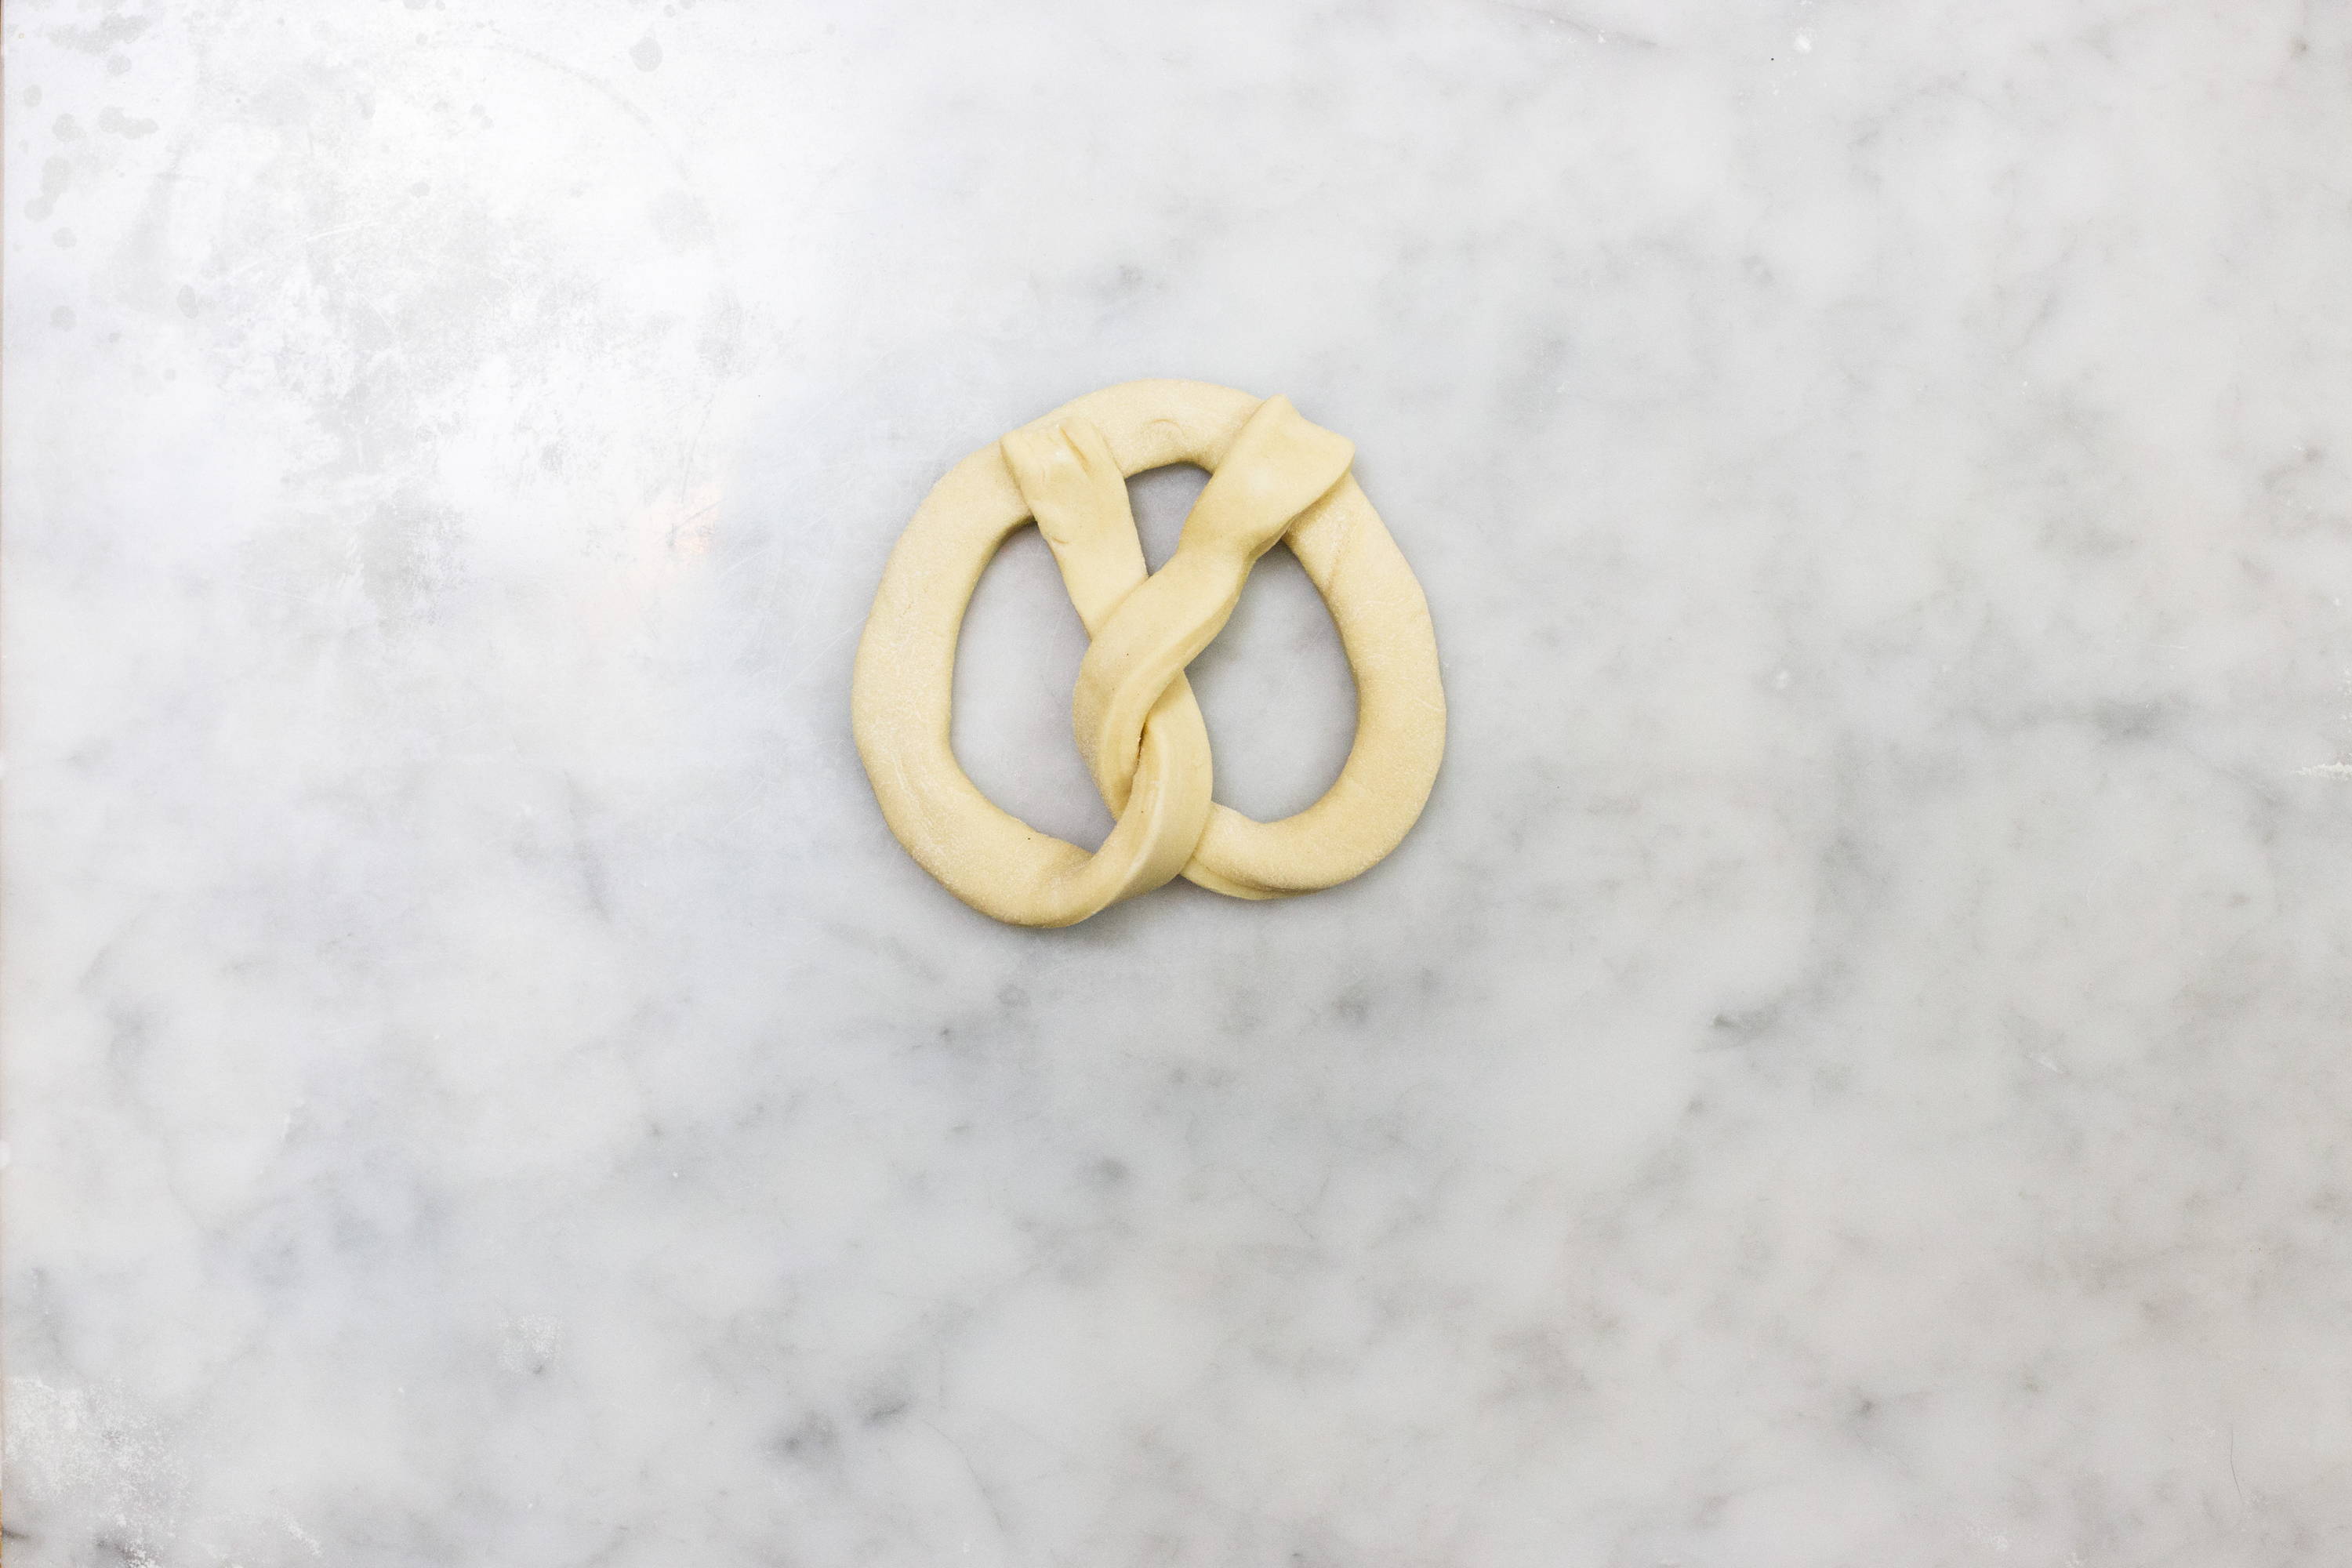 Making your first pretzel - How to make pretzels